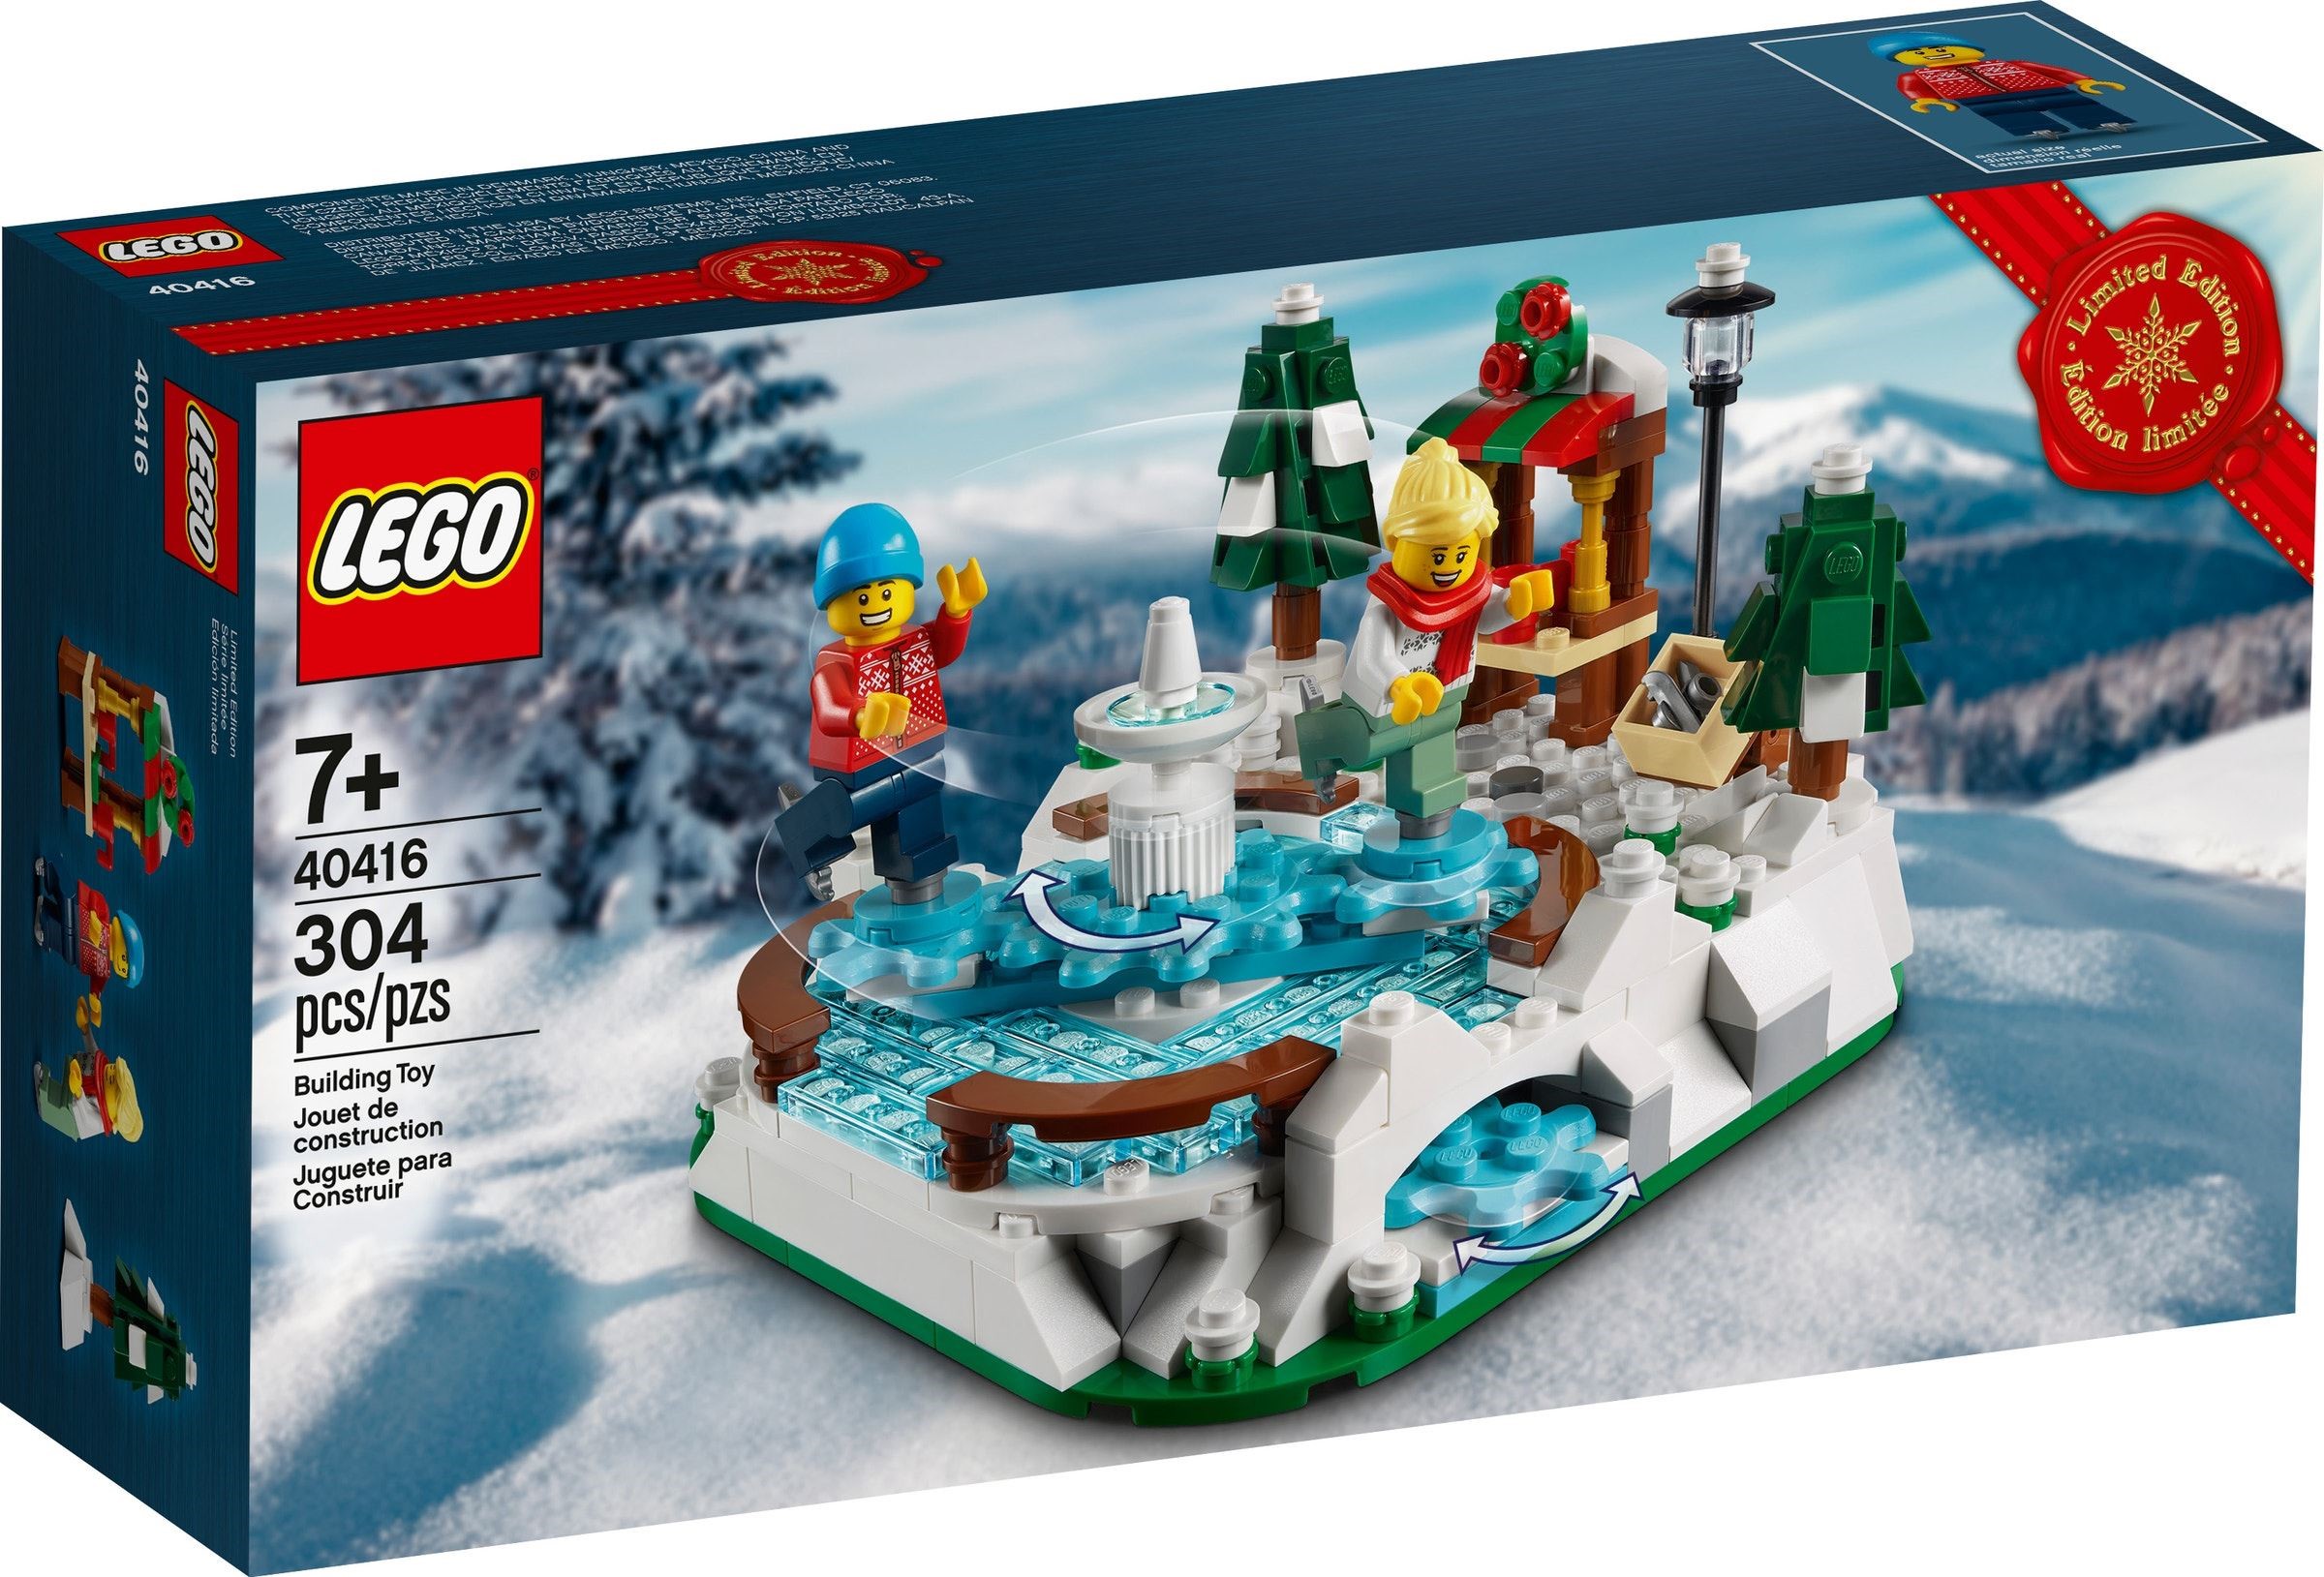 LEGO Creator Ice Skating Rink Set 40416 - US